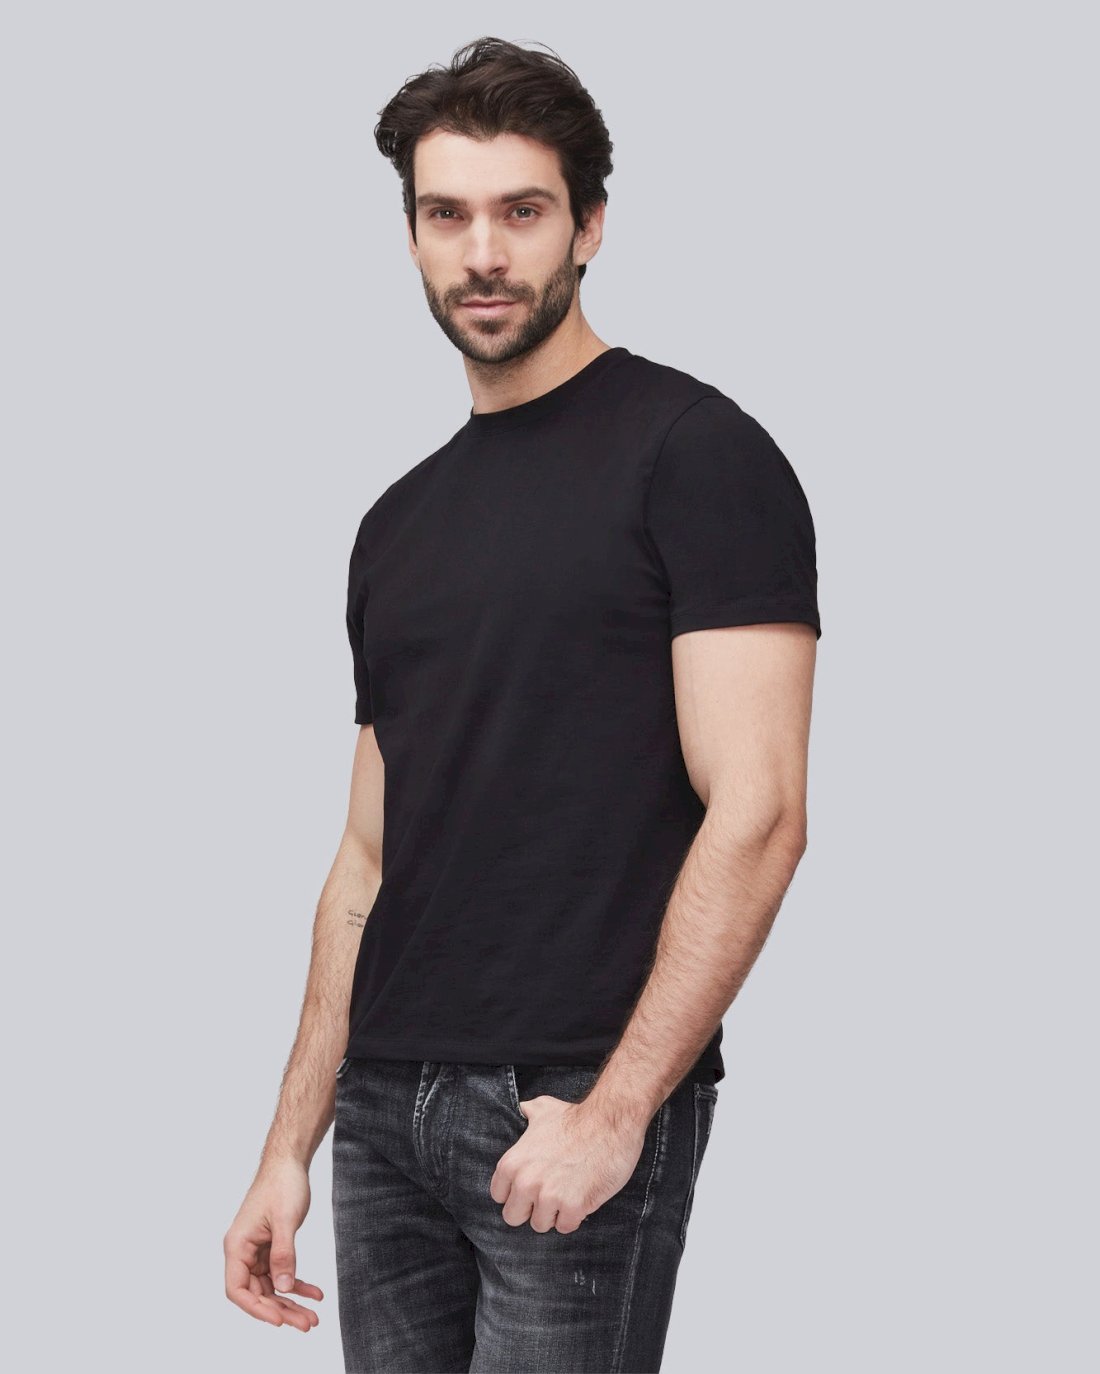 Men's Designer Tees & Long Sleeve Shirts